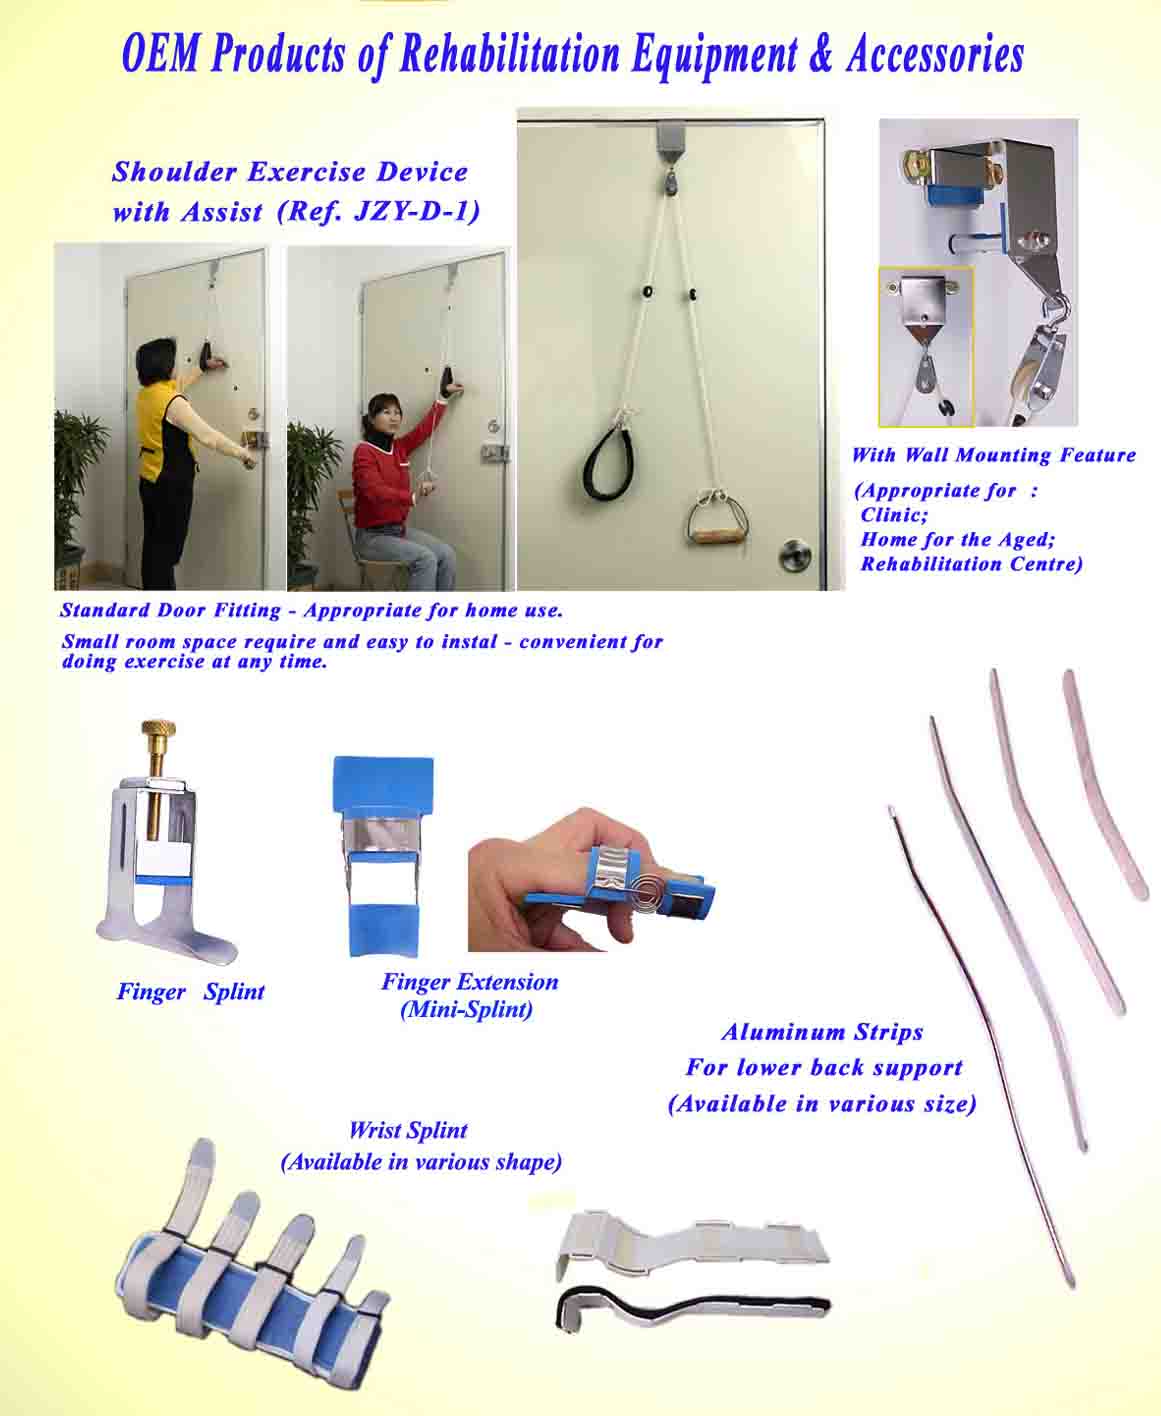  OEM Products Of Rehabilitation Equipment (Продукция OEM реабилитационного оборудования)